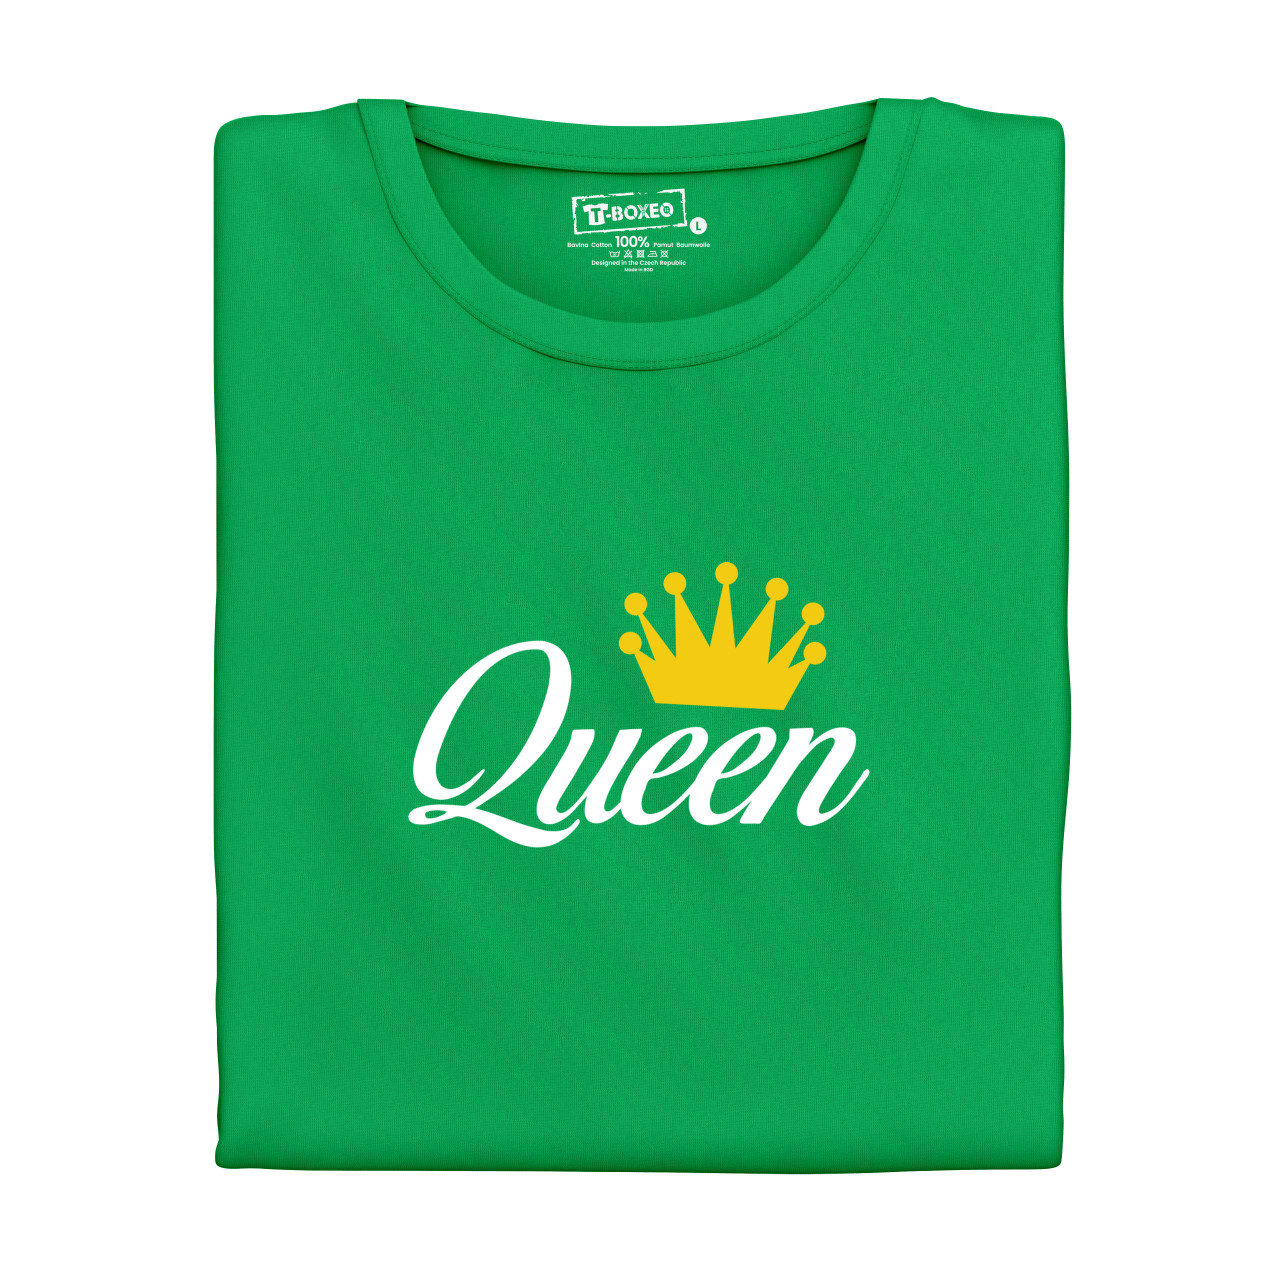 Dámské tričko s potiskem "Queen"